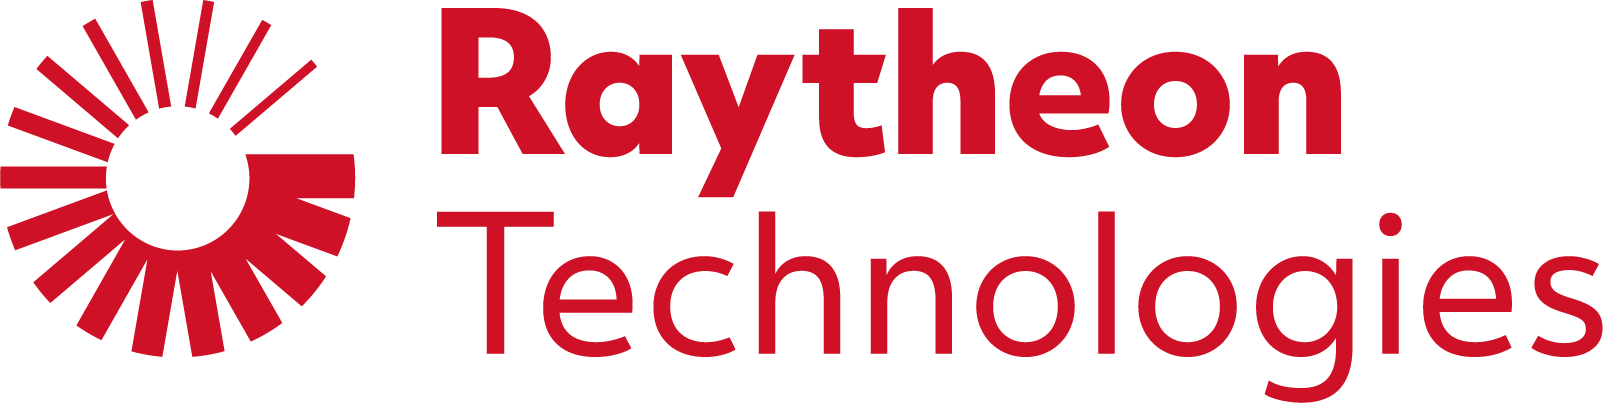 Raytheon Technologies Logo png